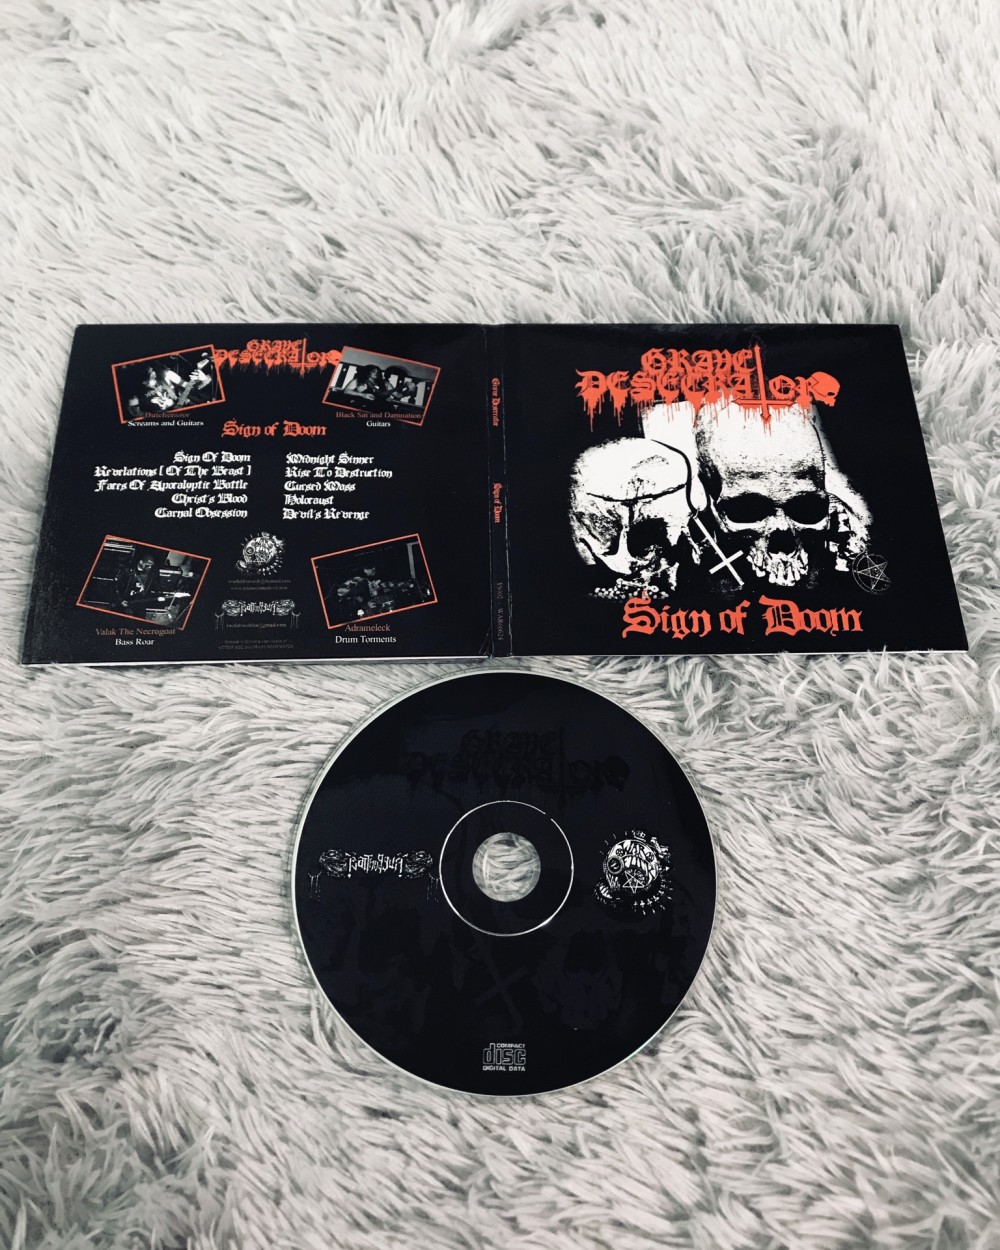 Grave Desecrator - Sign of Doom CD Photo